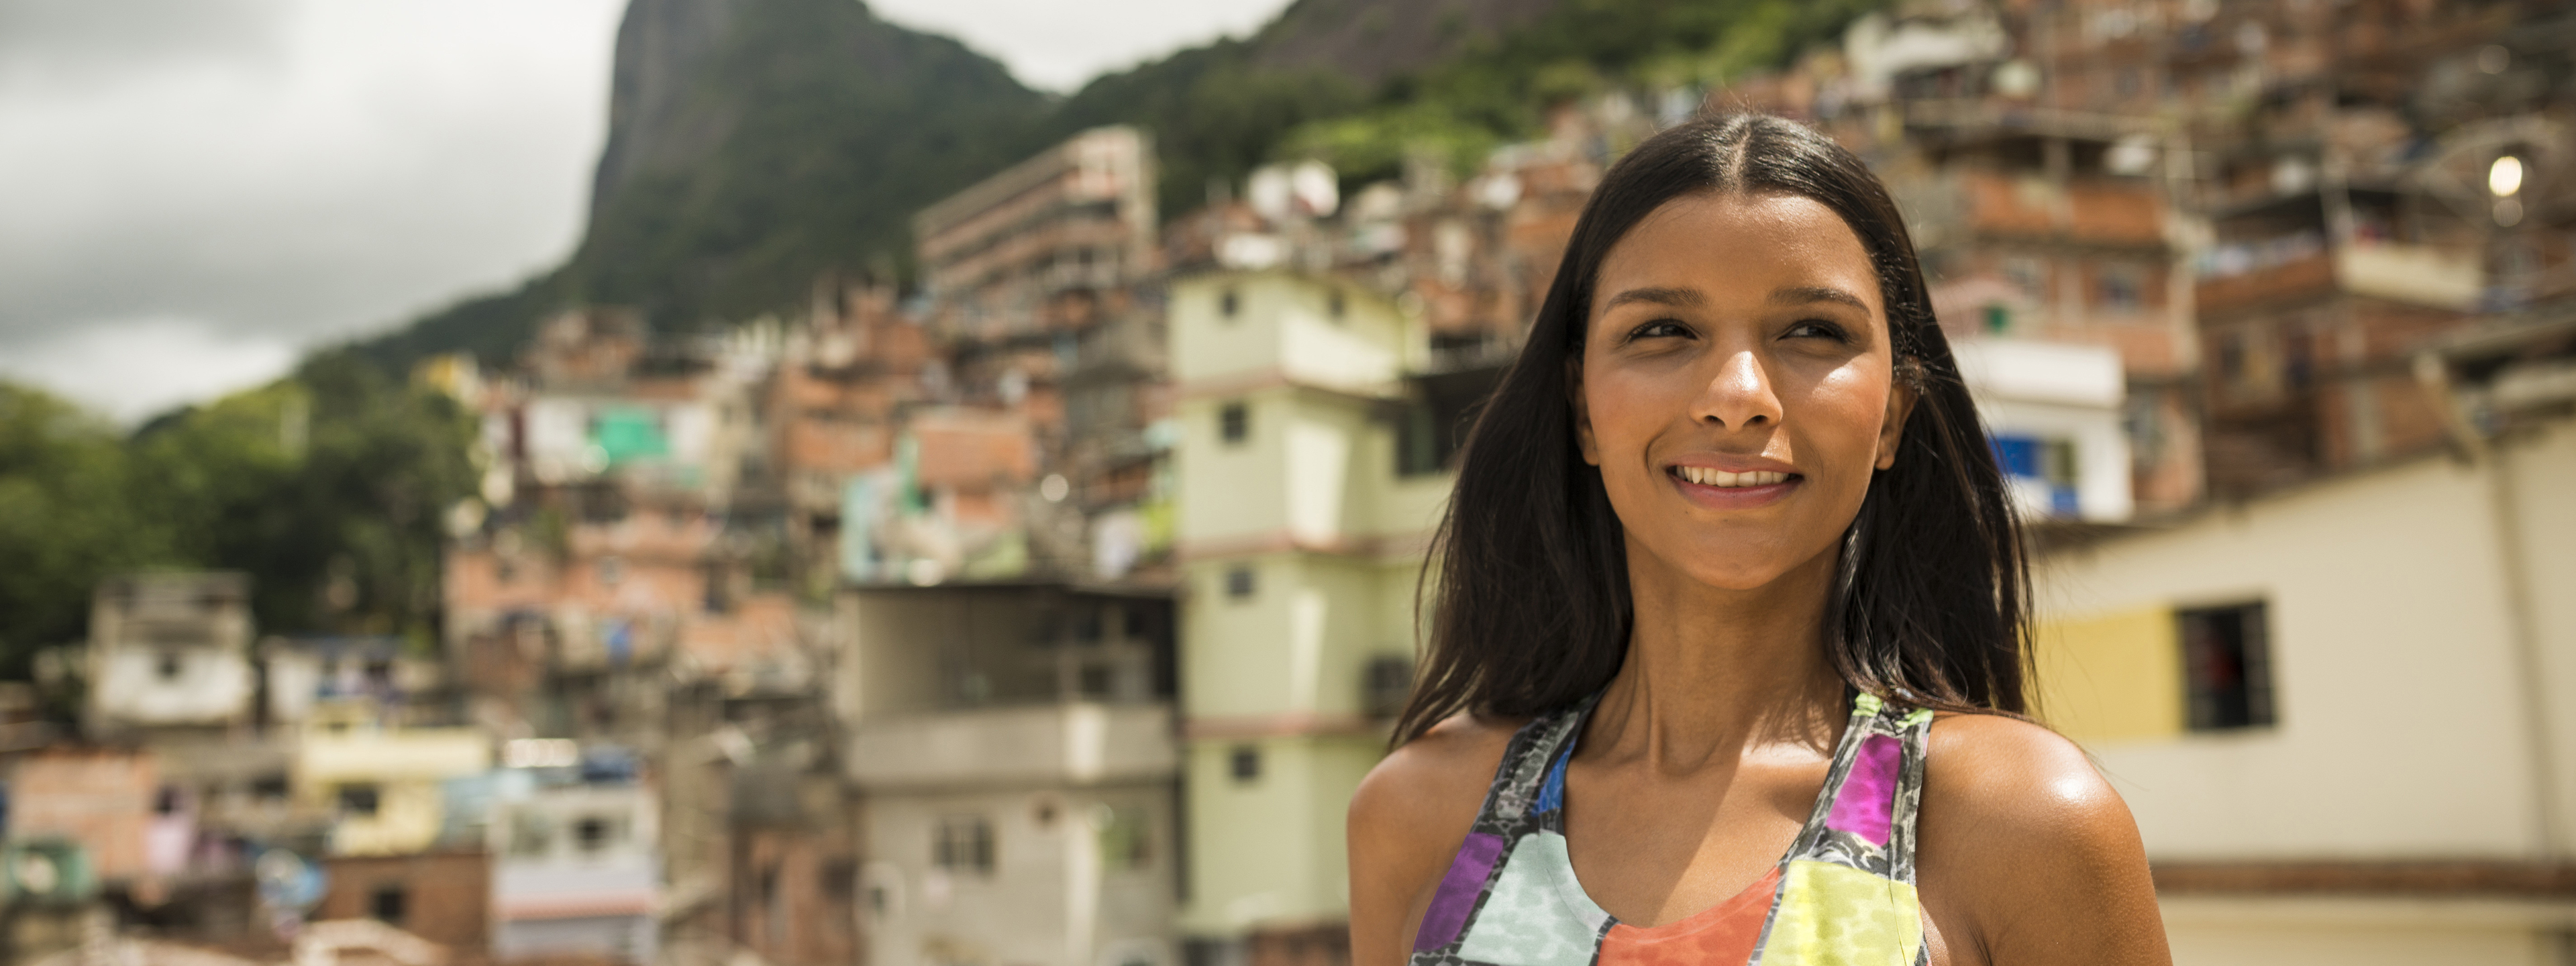 Portrait of young woman, Favela Santa Marta, Rio de Janeiro Brazil